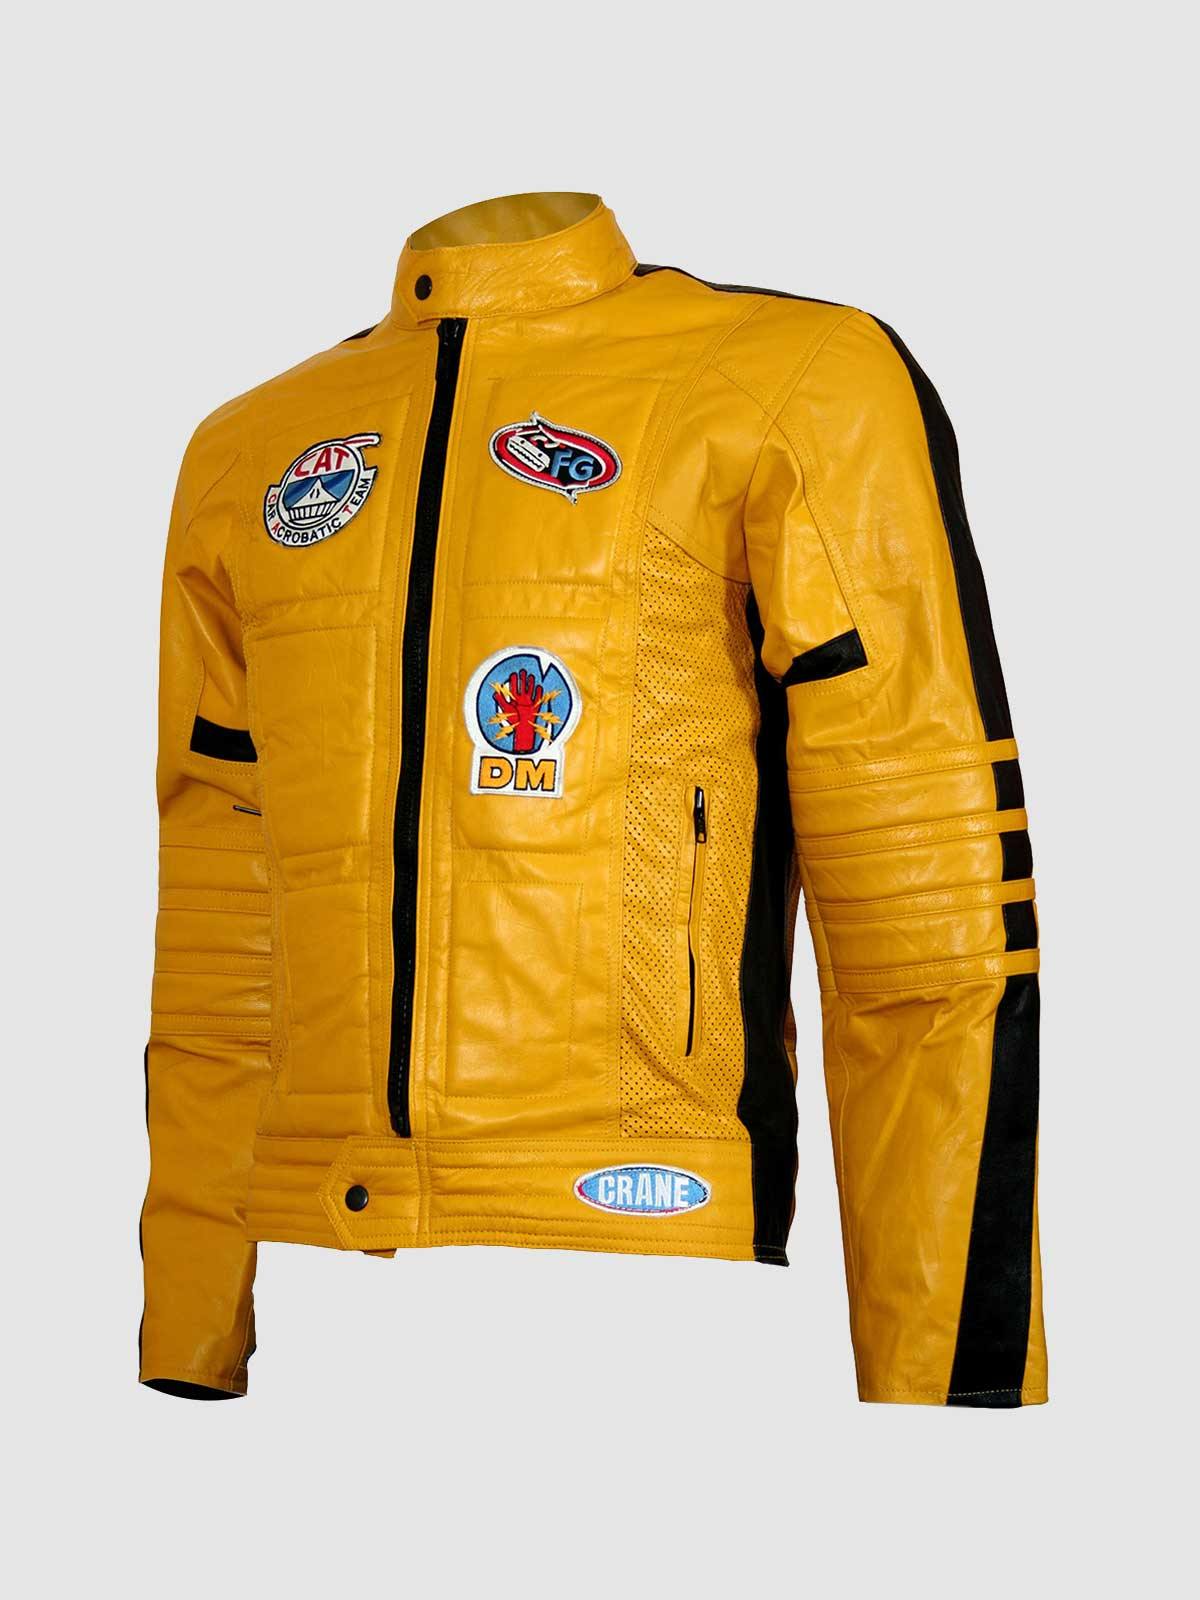 yellow leather jacket men